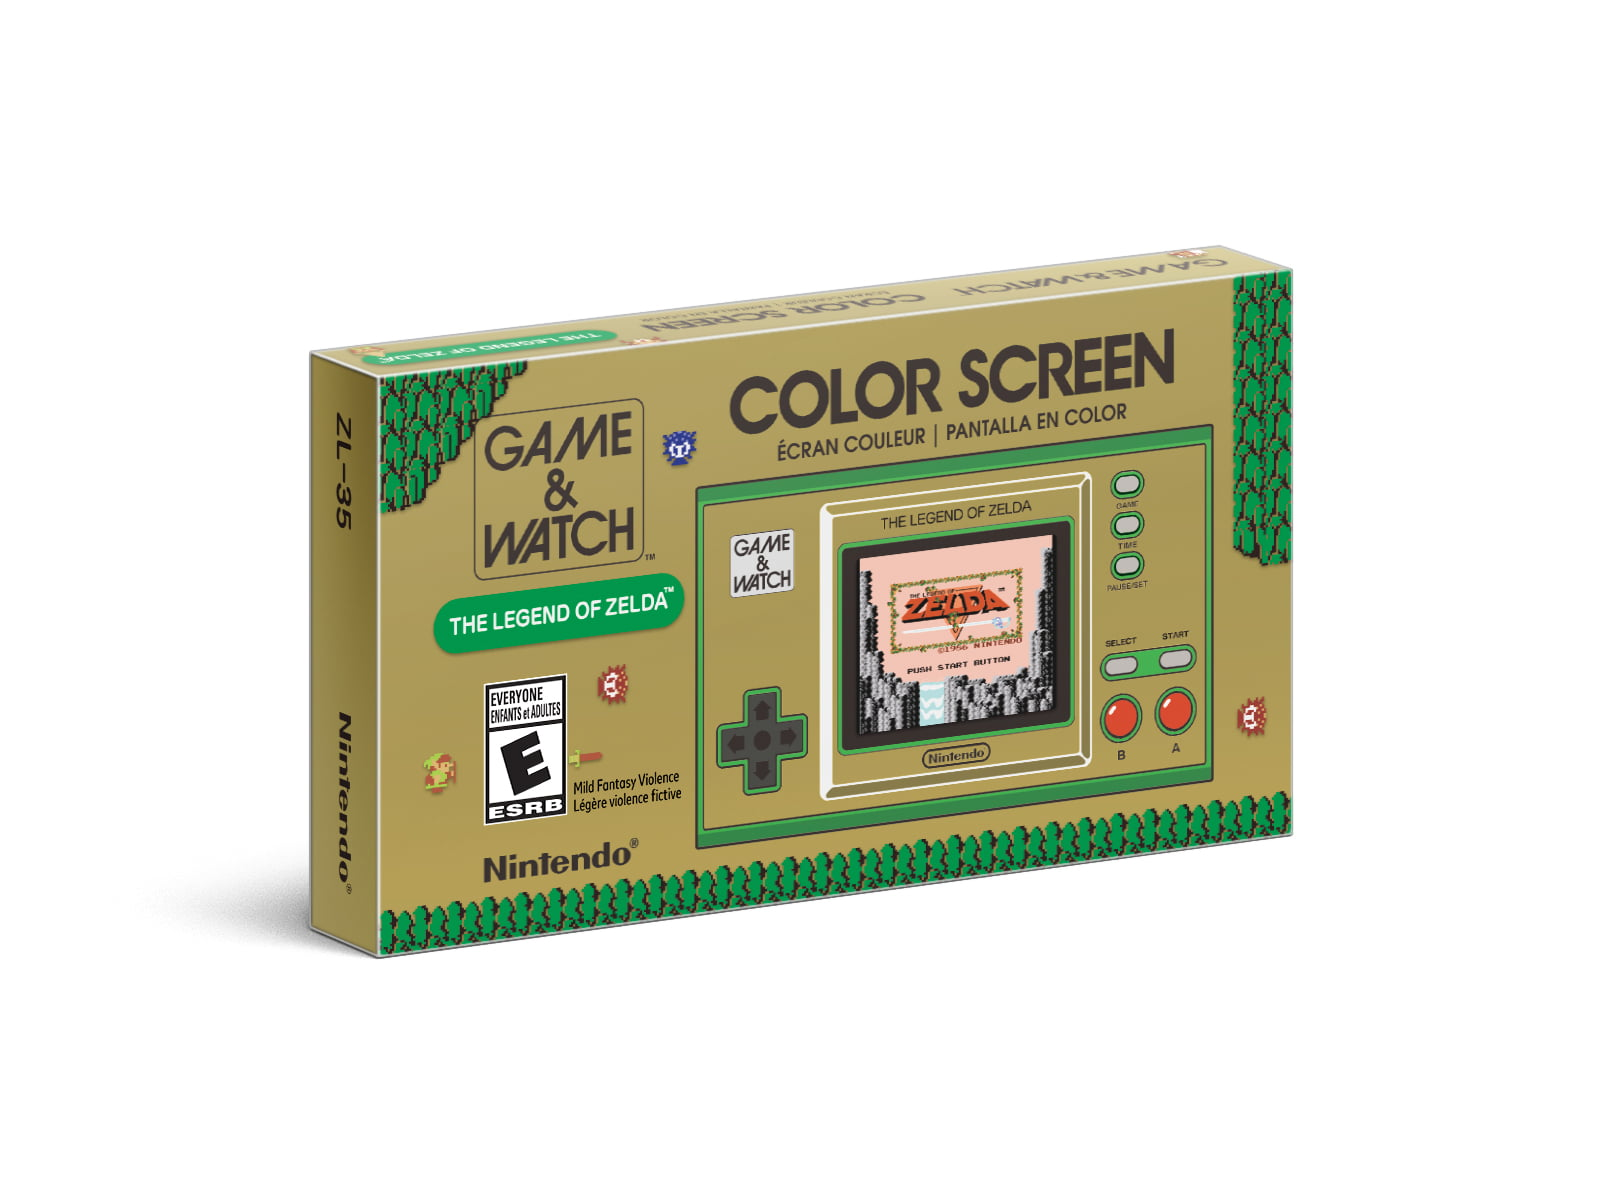 Game & Watch: The Legend of Zelda, Nintendo NES Classic - Walmart.com YMMV $25.00